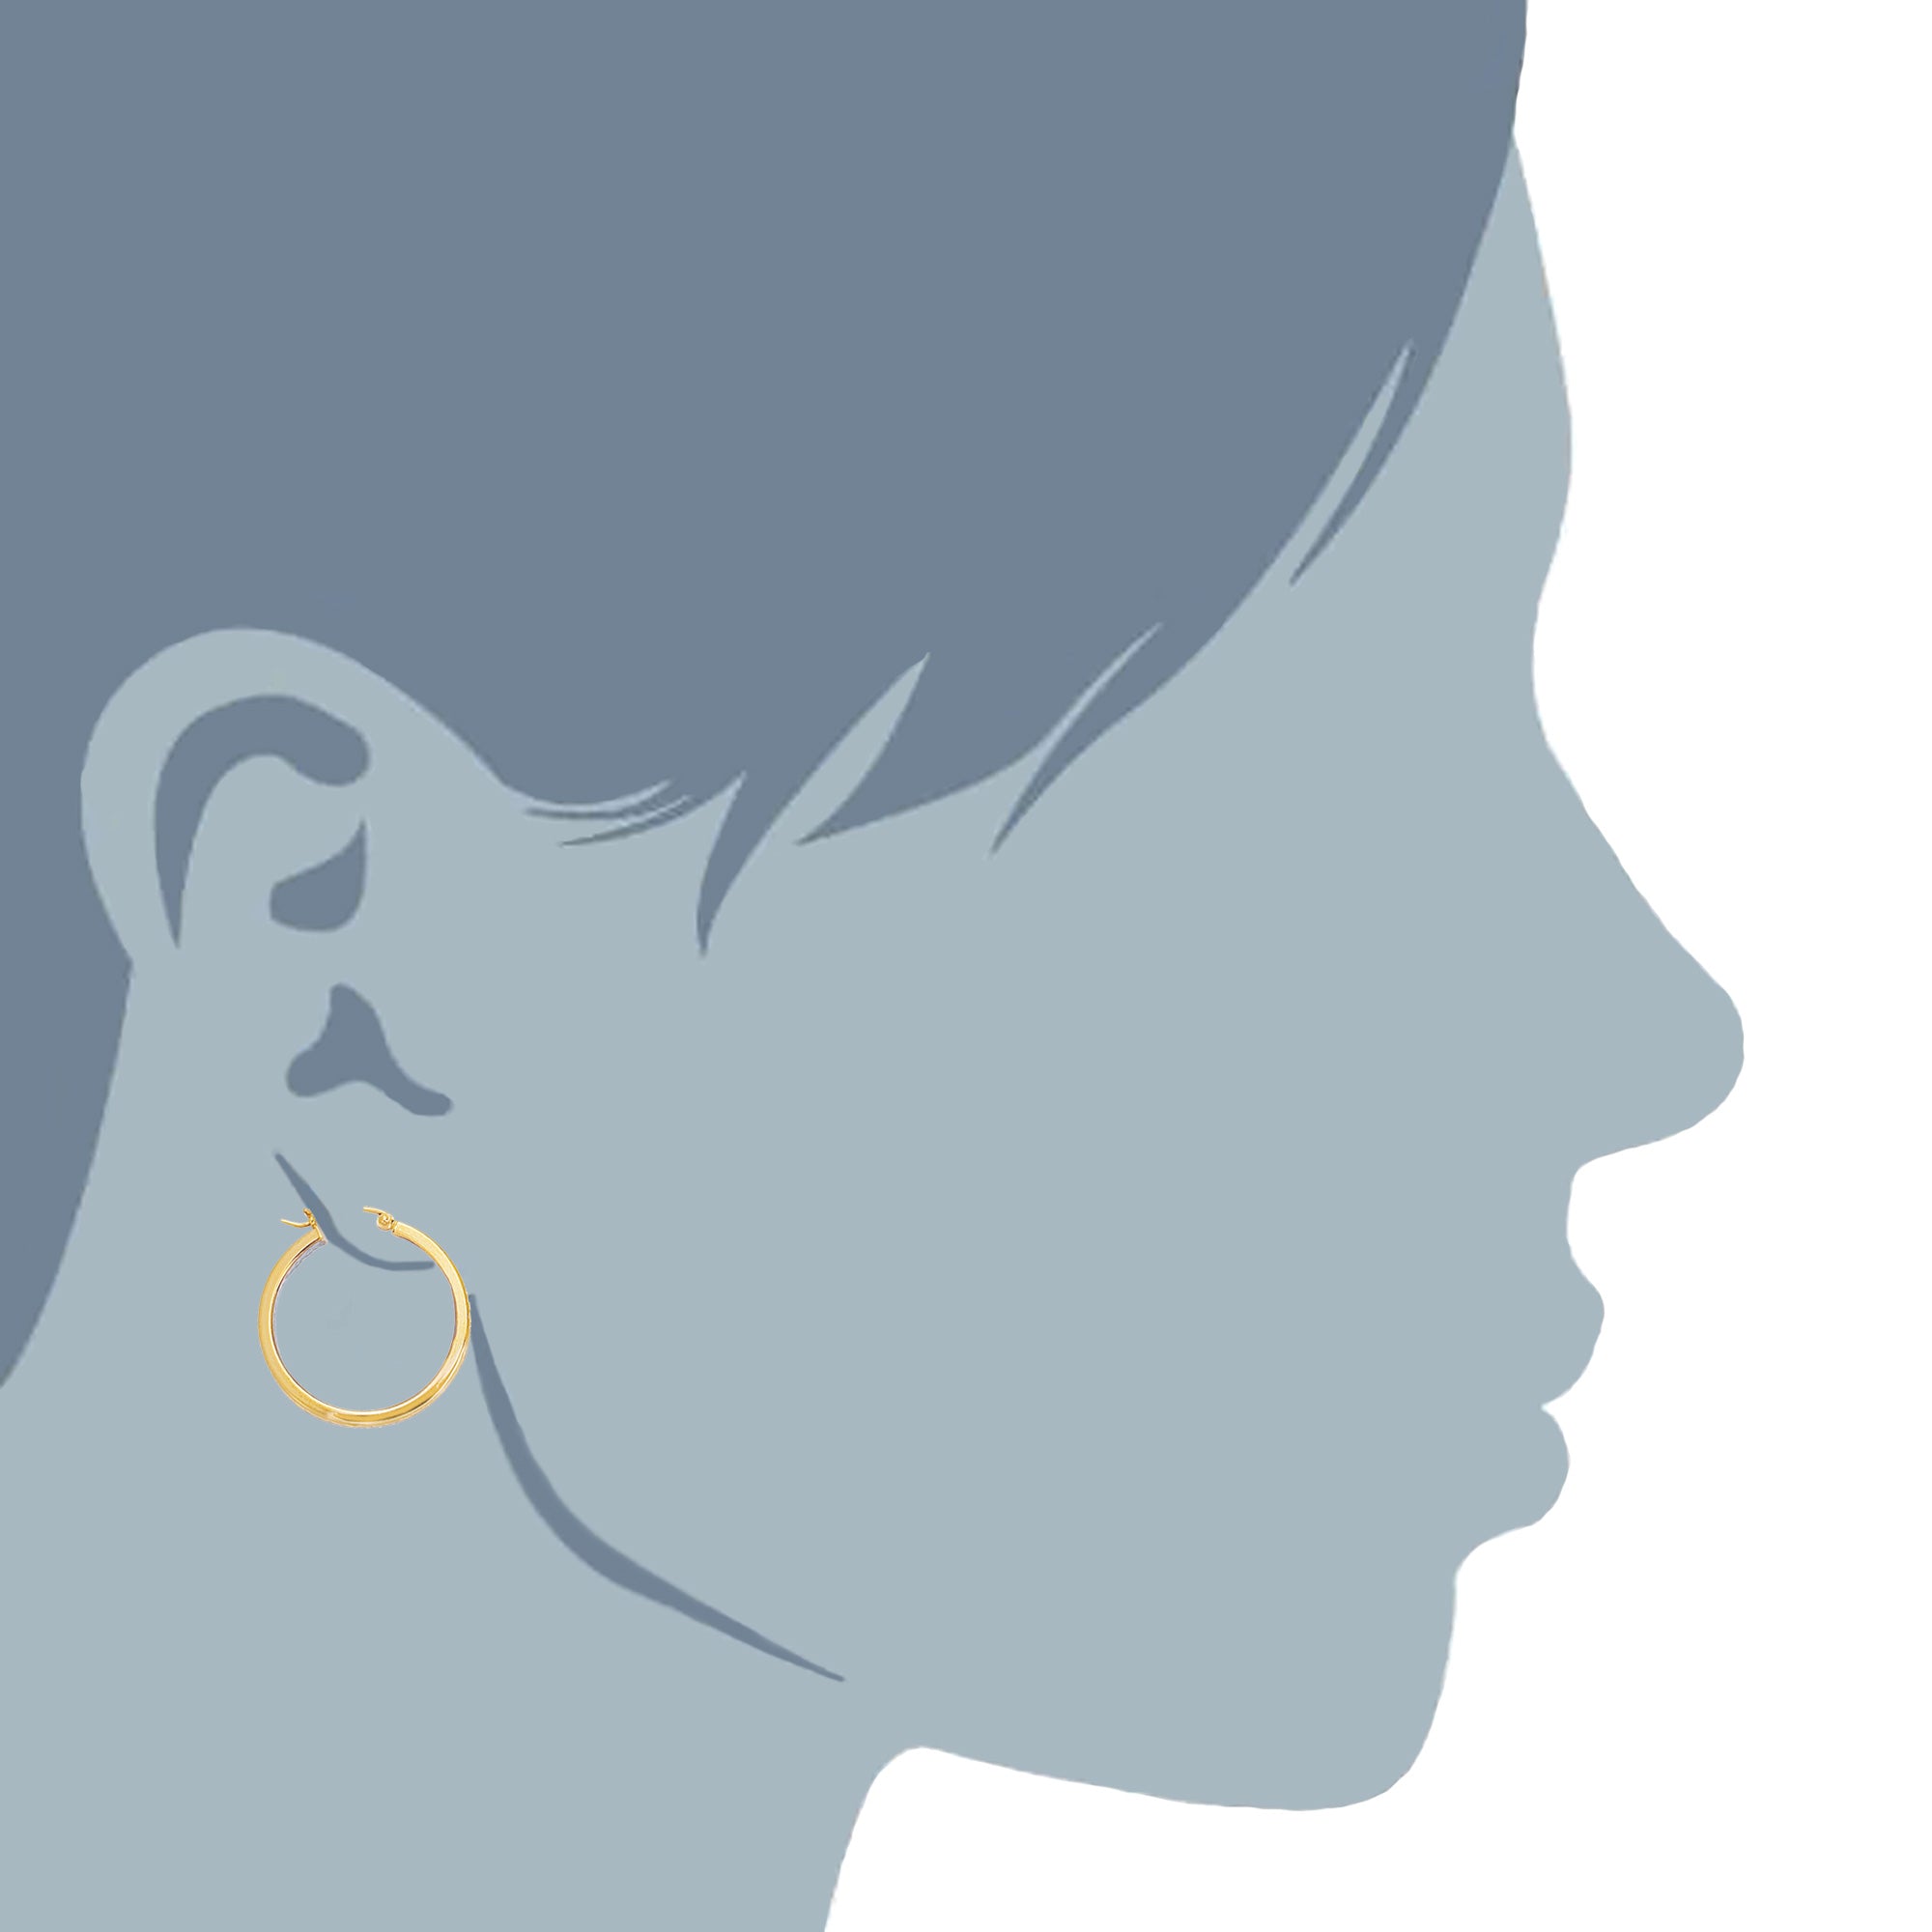 10k 2 Tone Yellow And White Diamond Cut Texture Round Hoop Earrings, Diameter 25mm fine designer jewelry for men and women